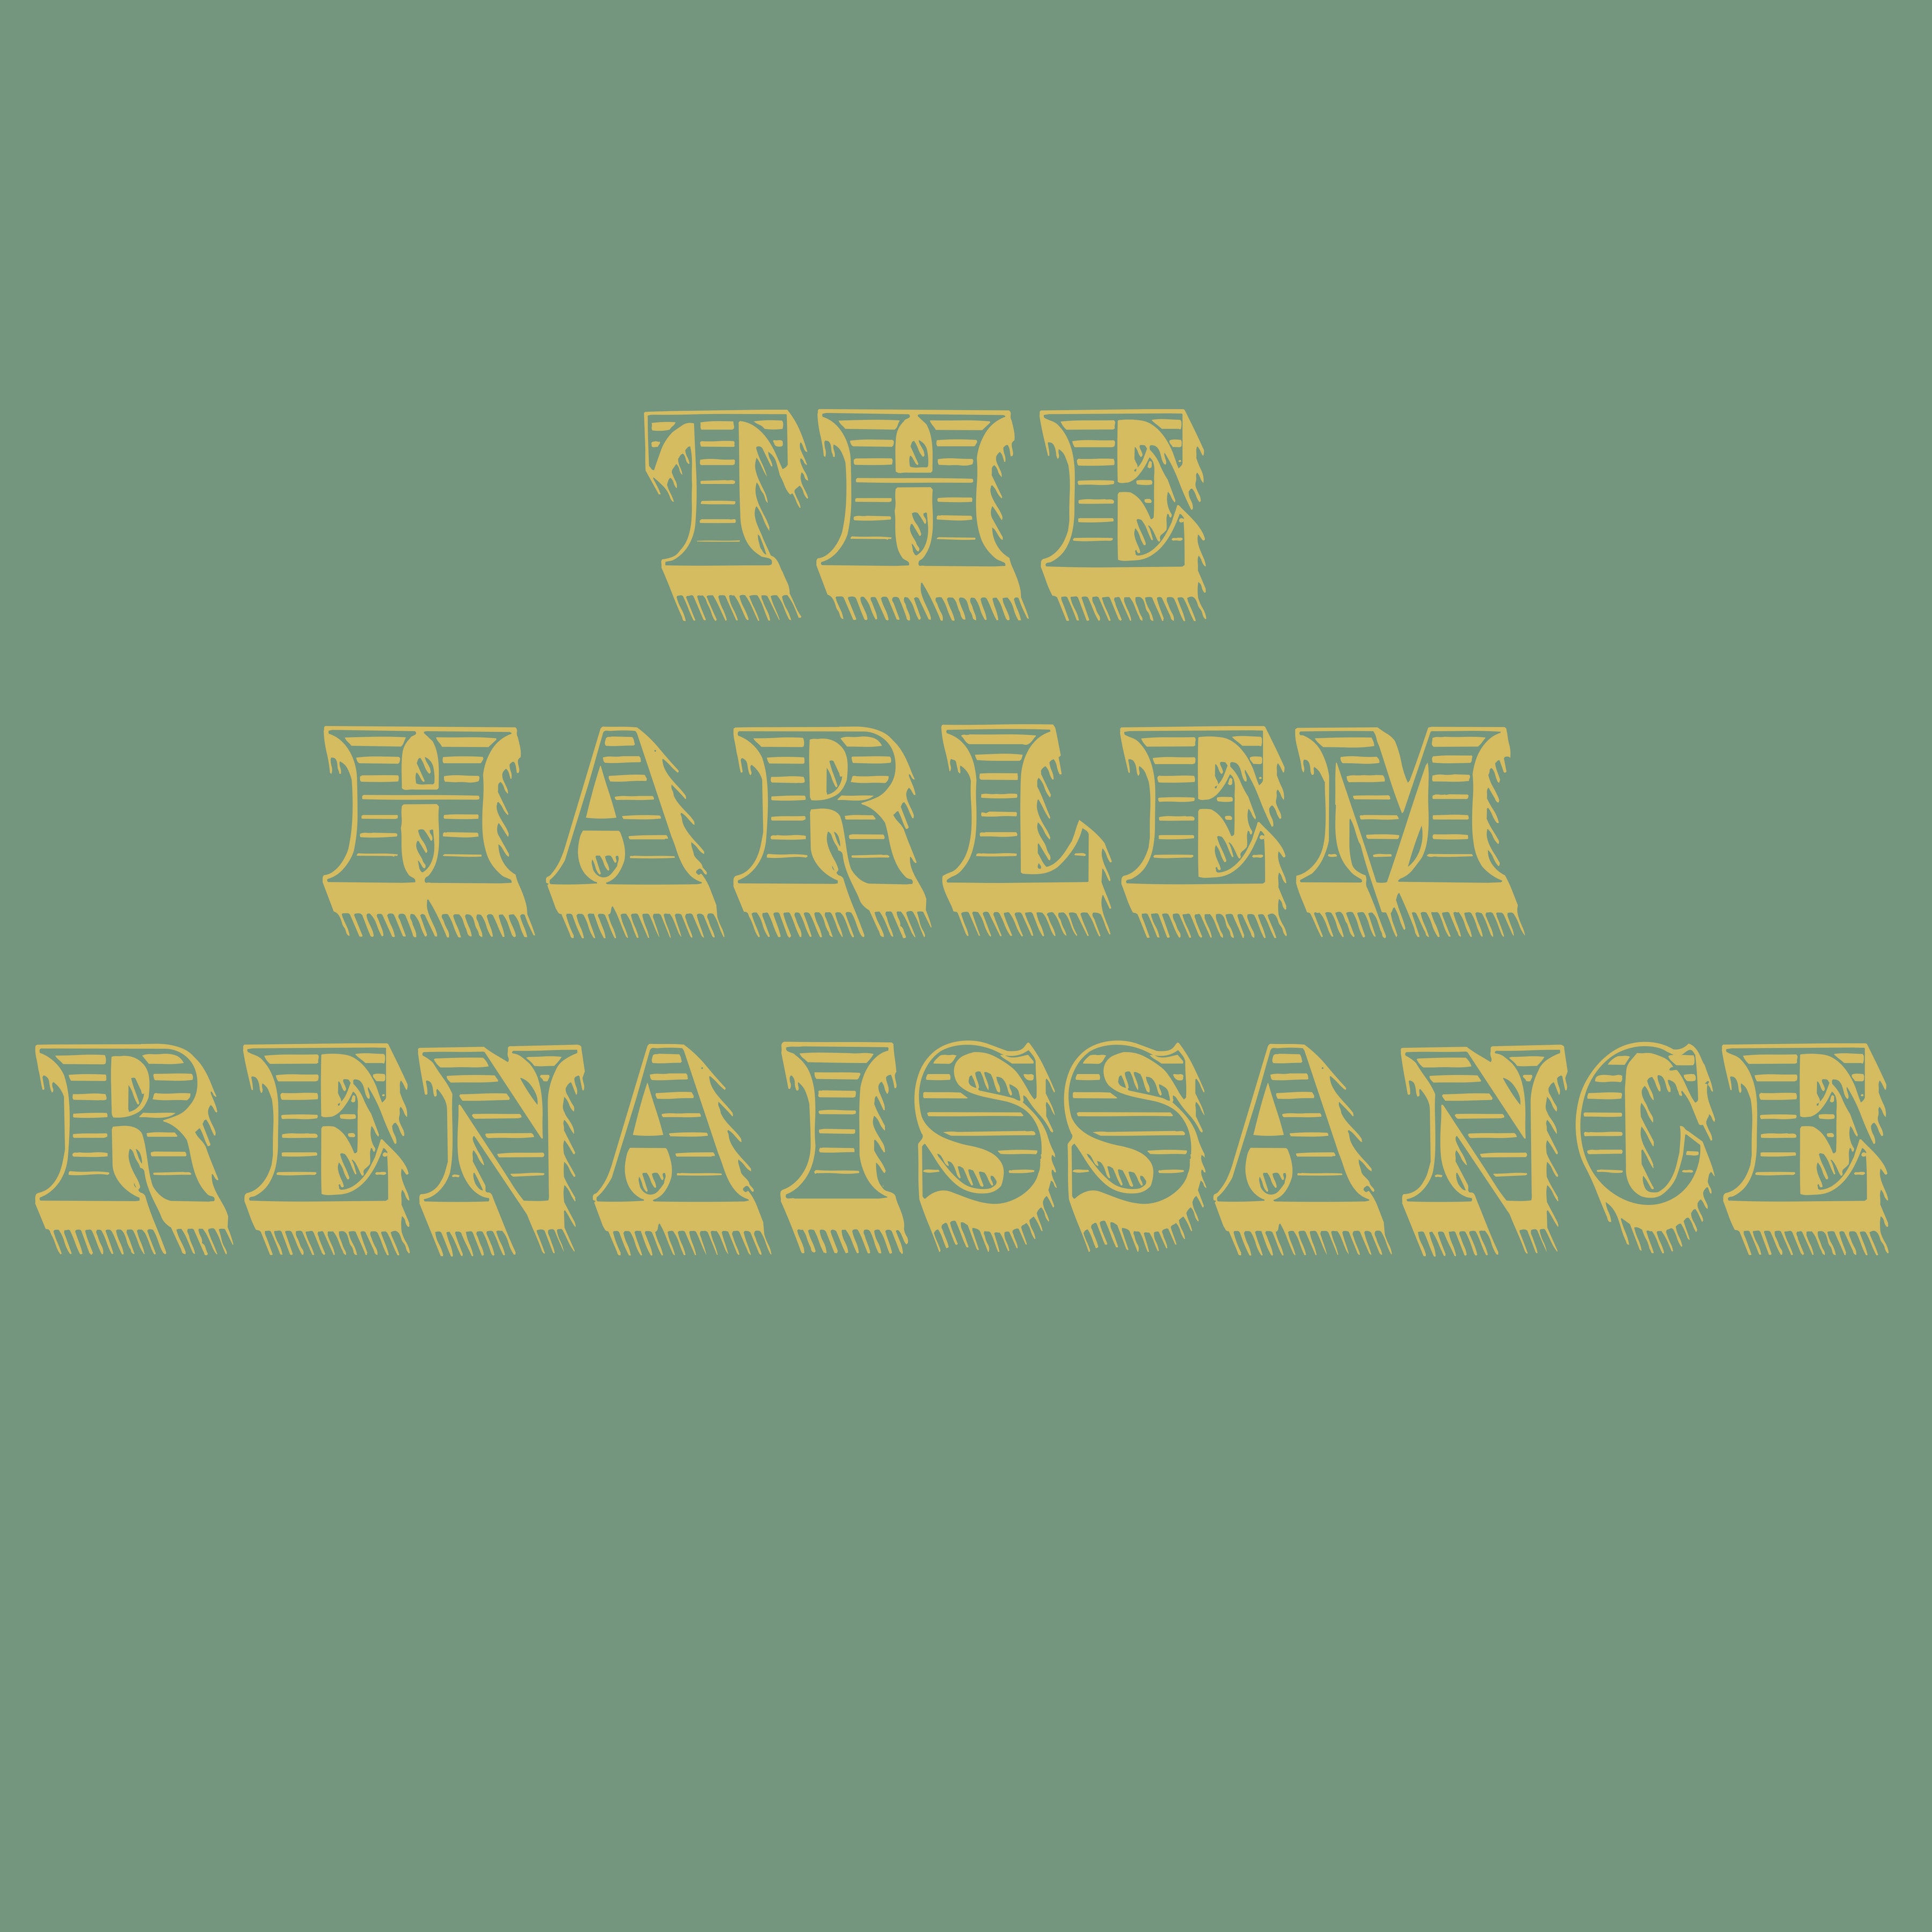 Harlem Renaissance: Illuminating the Vibrant History of a Cultural Revival